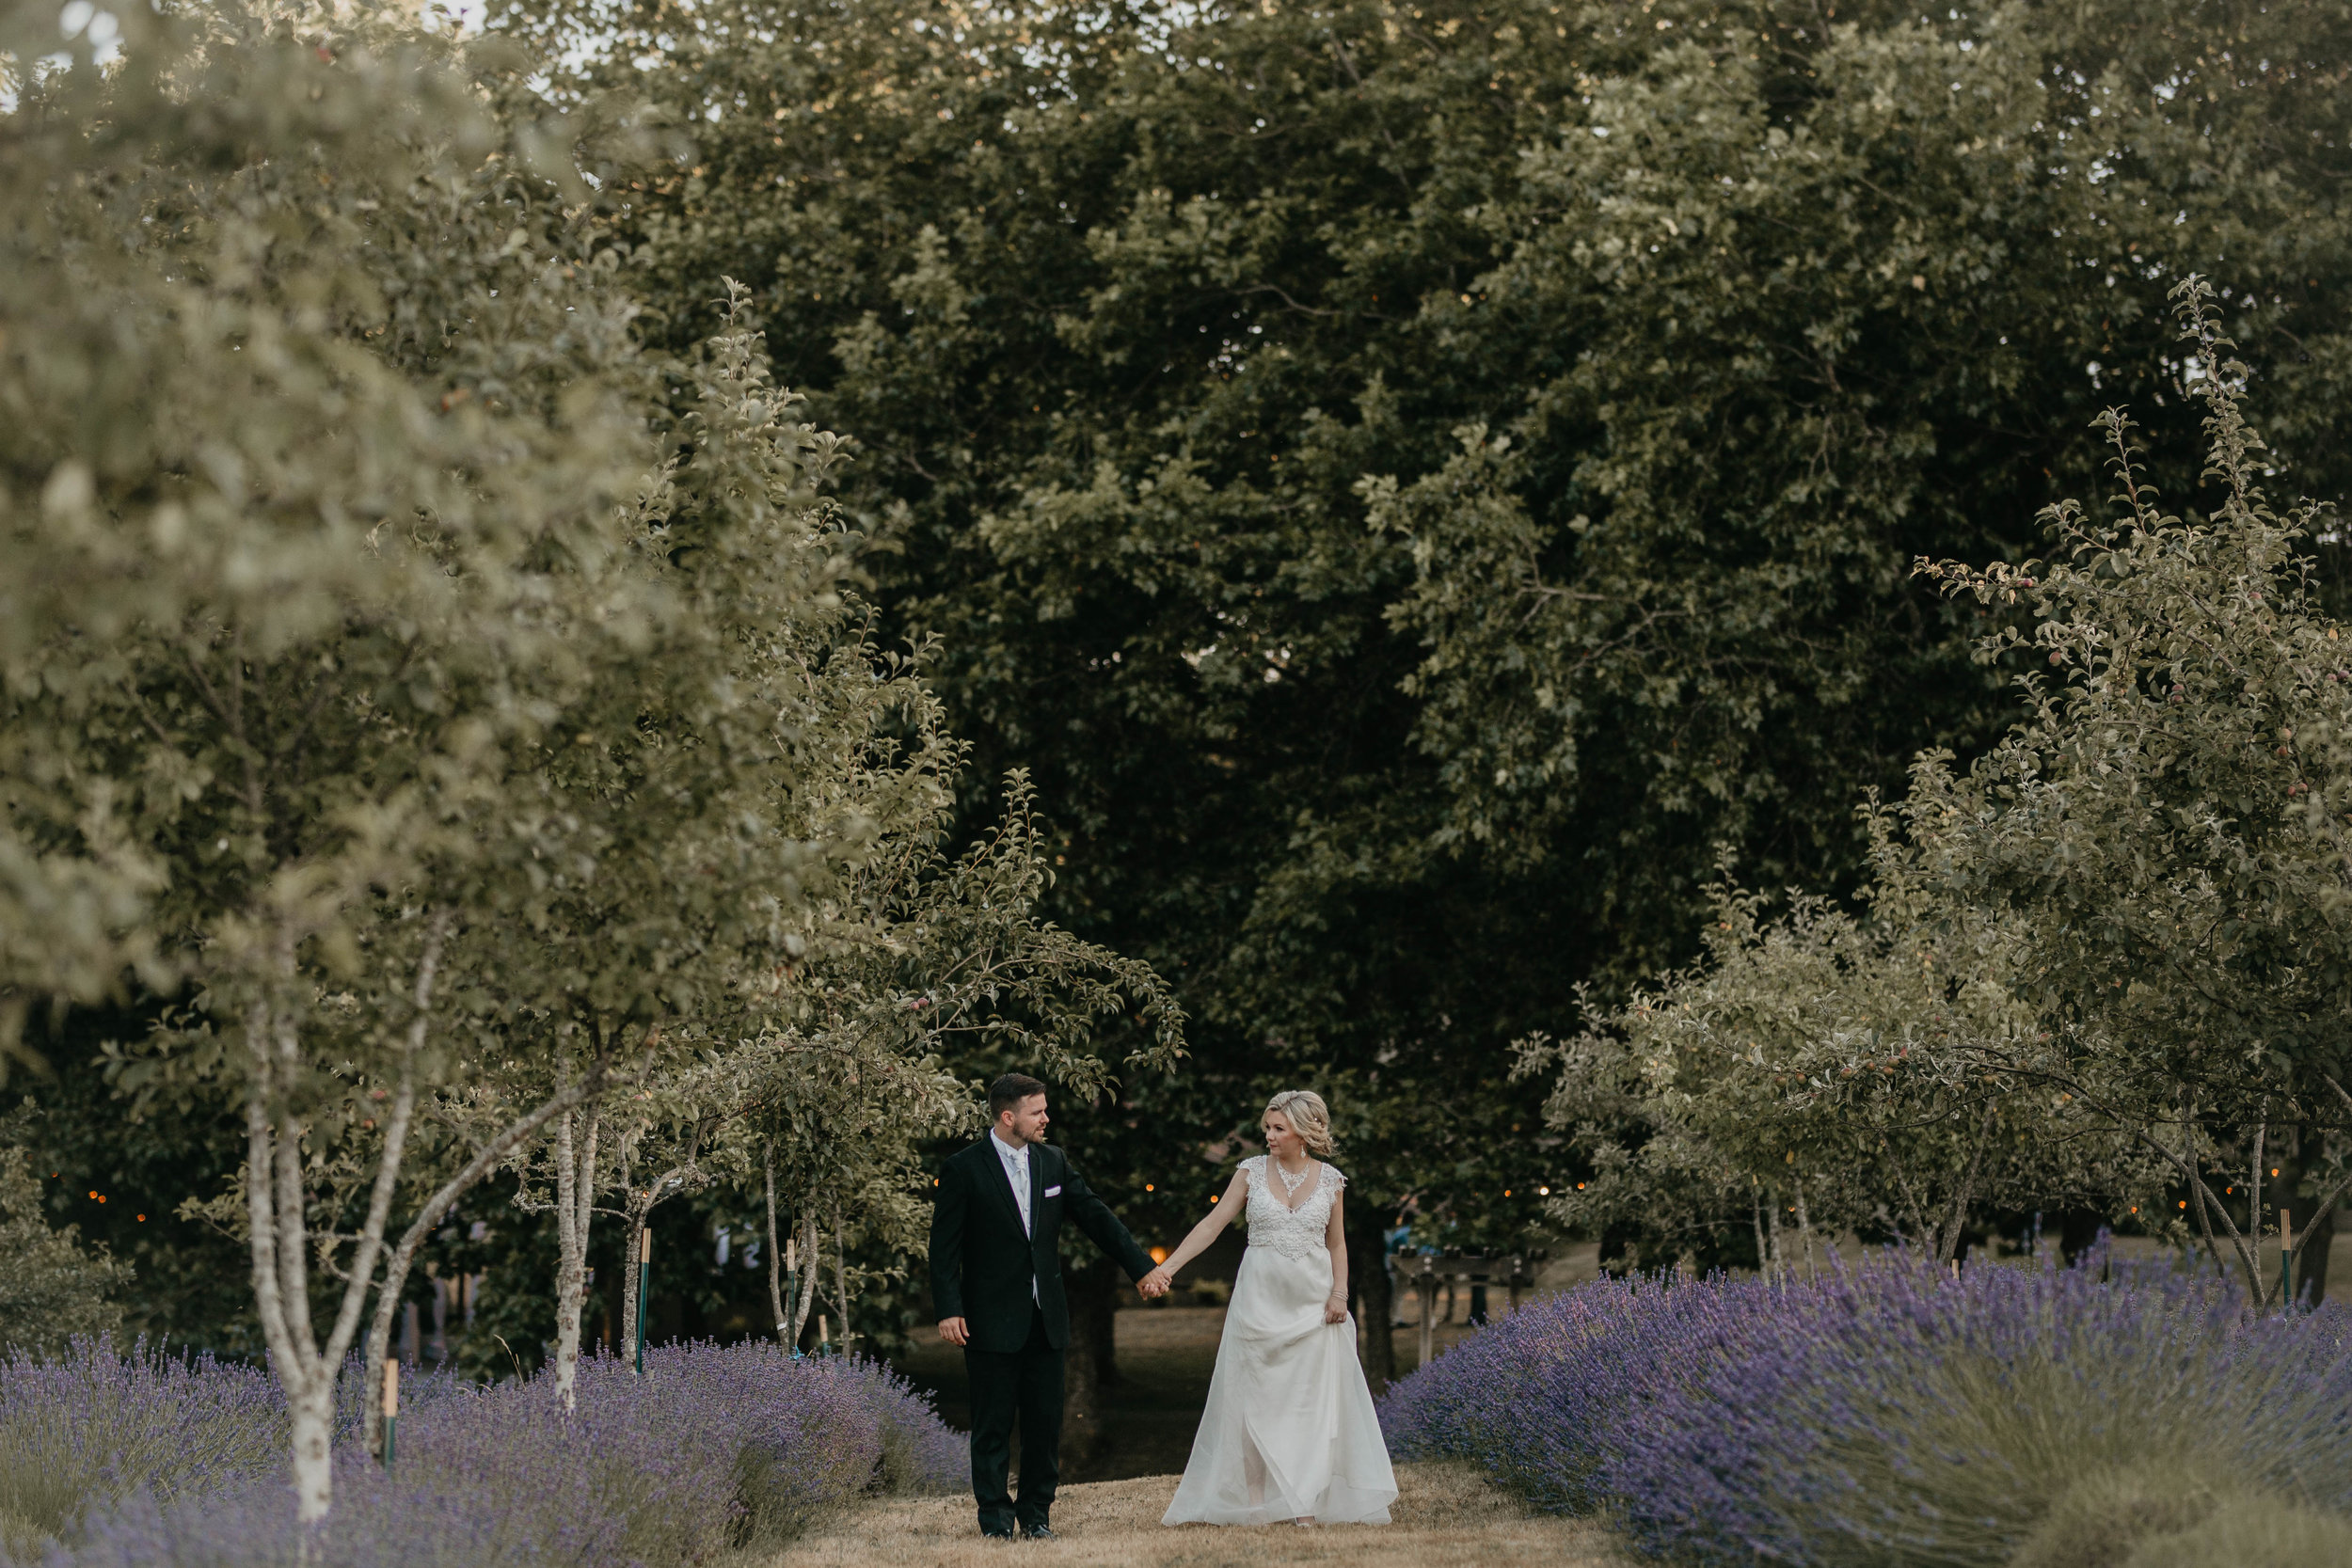 nicole-daacke-photography-kingston-house-bainbride-washington-wedding-photography-summer-wedding-lavendar-field-pacific-northwest-wedding-glam-forest-elopement-photographer-77.jpg